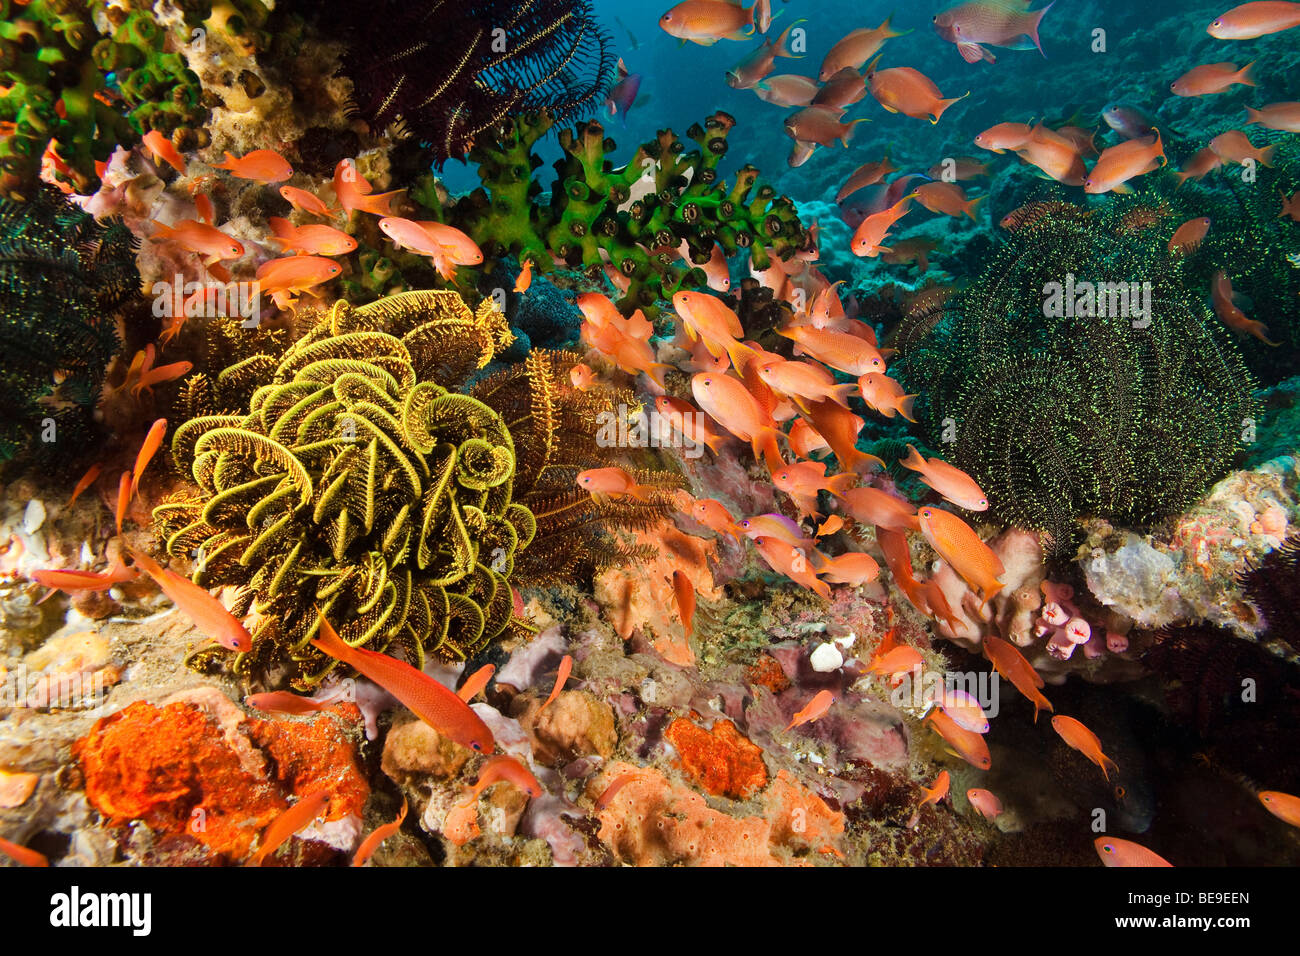 Schooling anthias and crinoids inhabit this dense reef scene, Philippines. Stock Photo